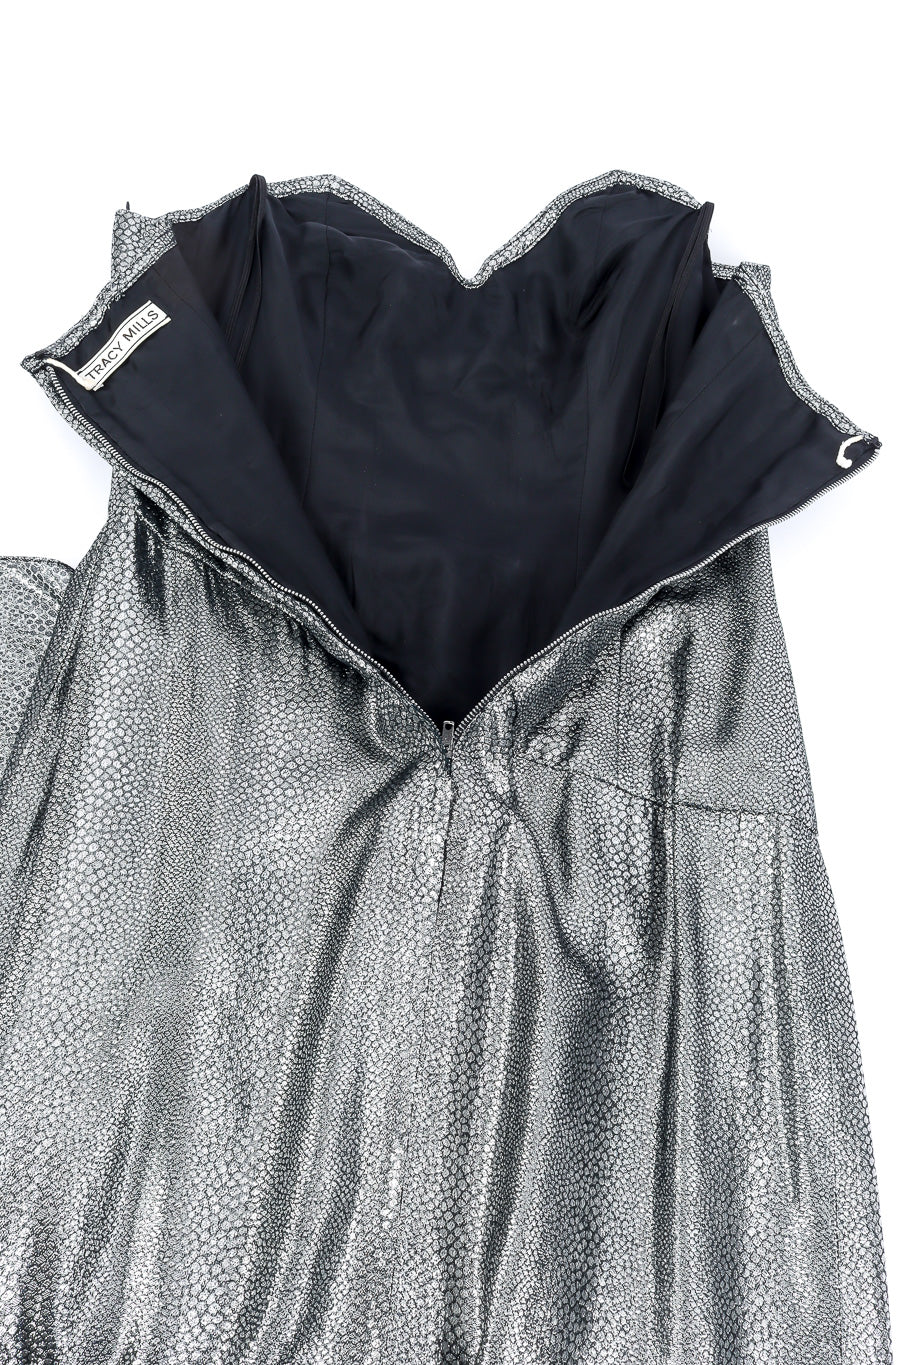 Metallic dress by Tracy Mills flat lay bodice back @recessla